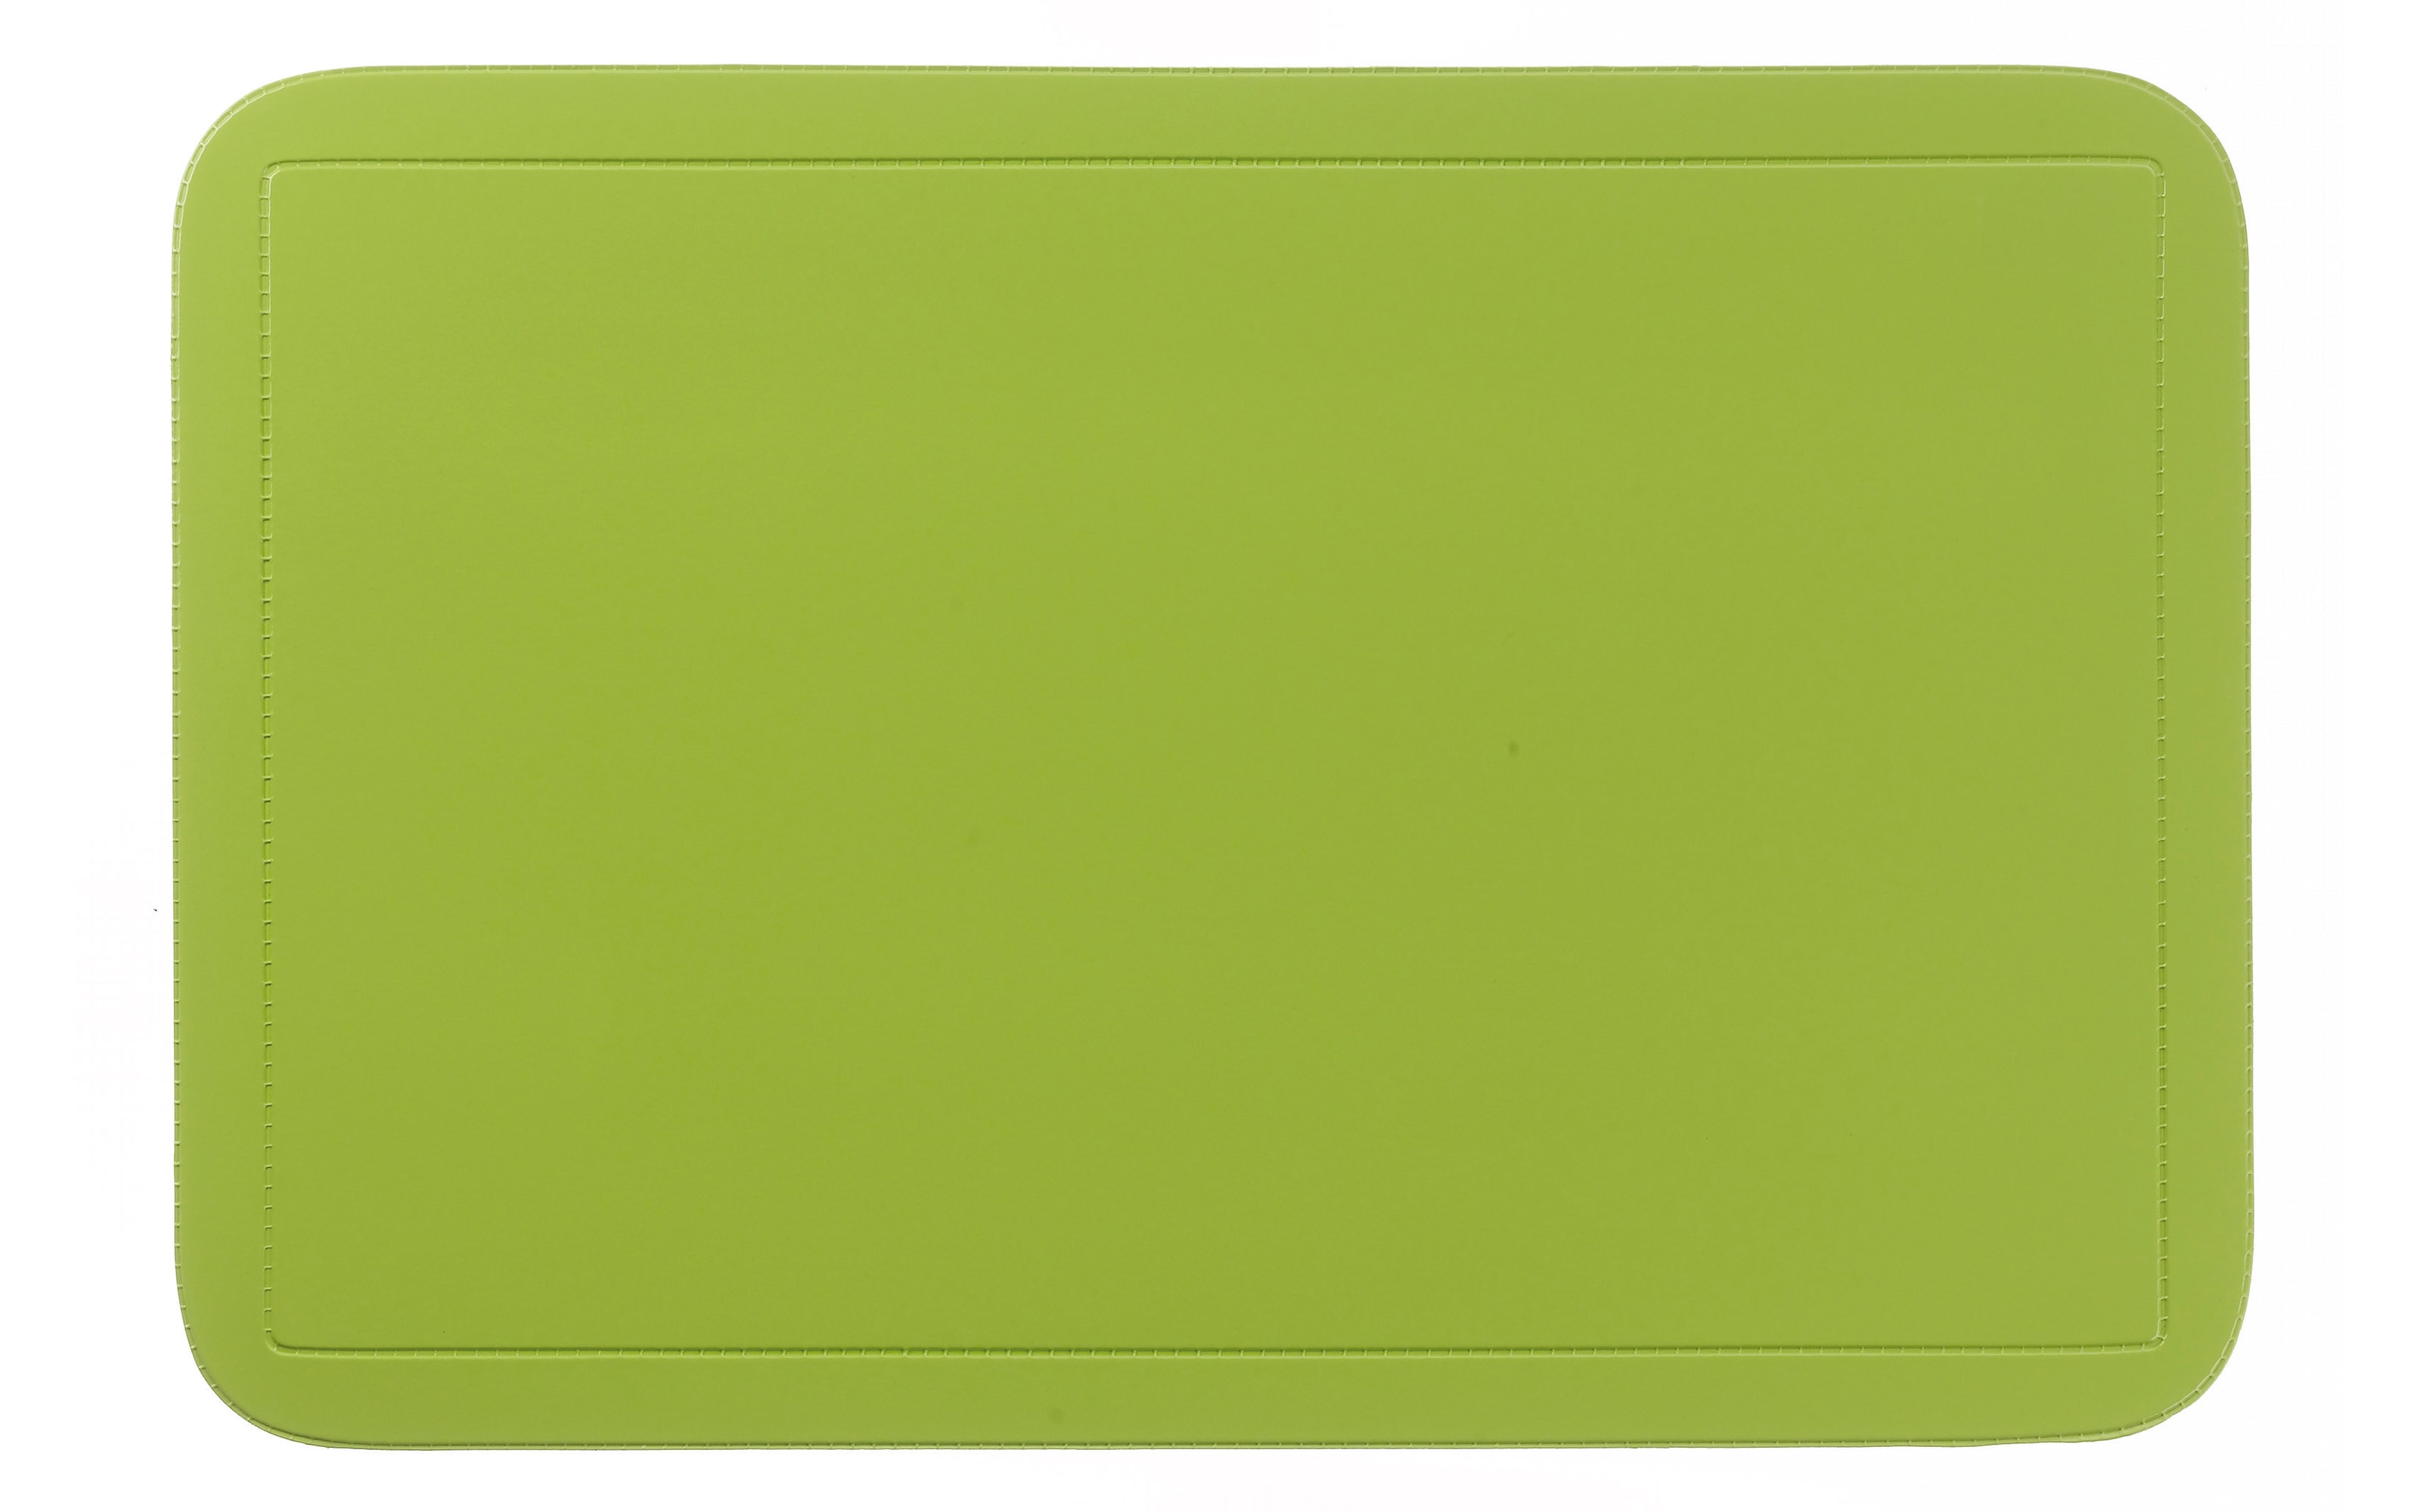 Tischset Uni in lemongrün, 28.5 x 43.5 cm